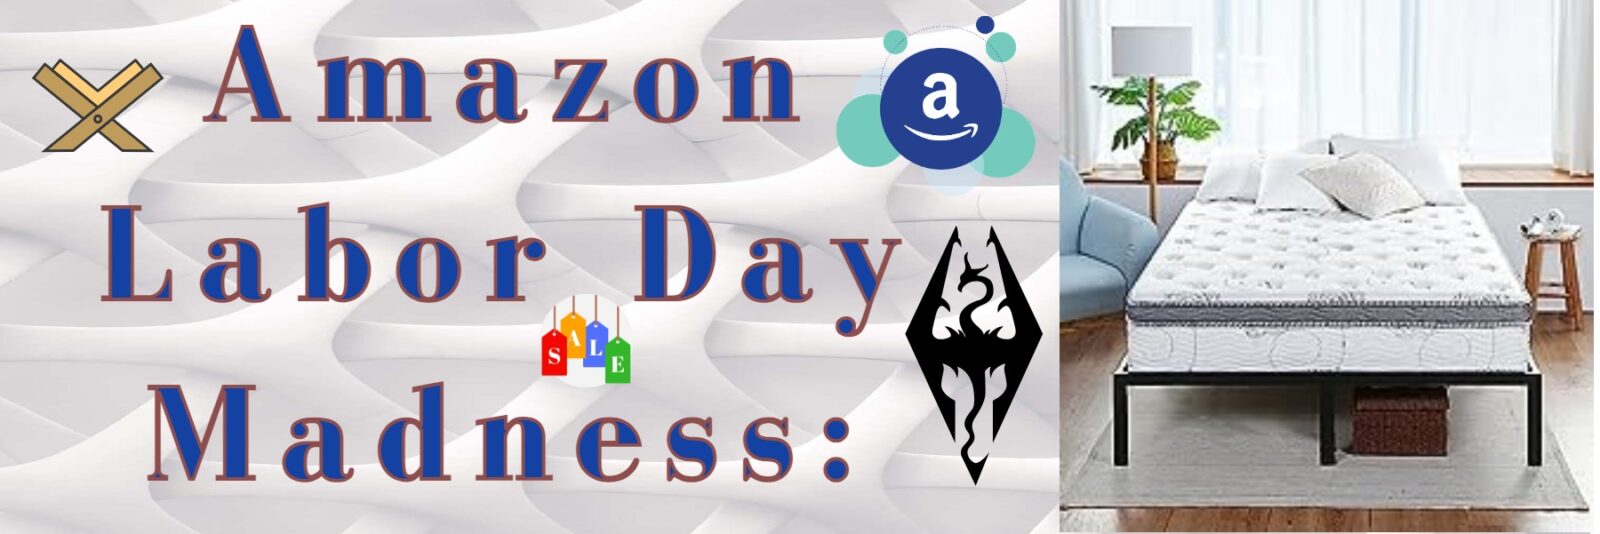 Amazon Labor Day Madness